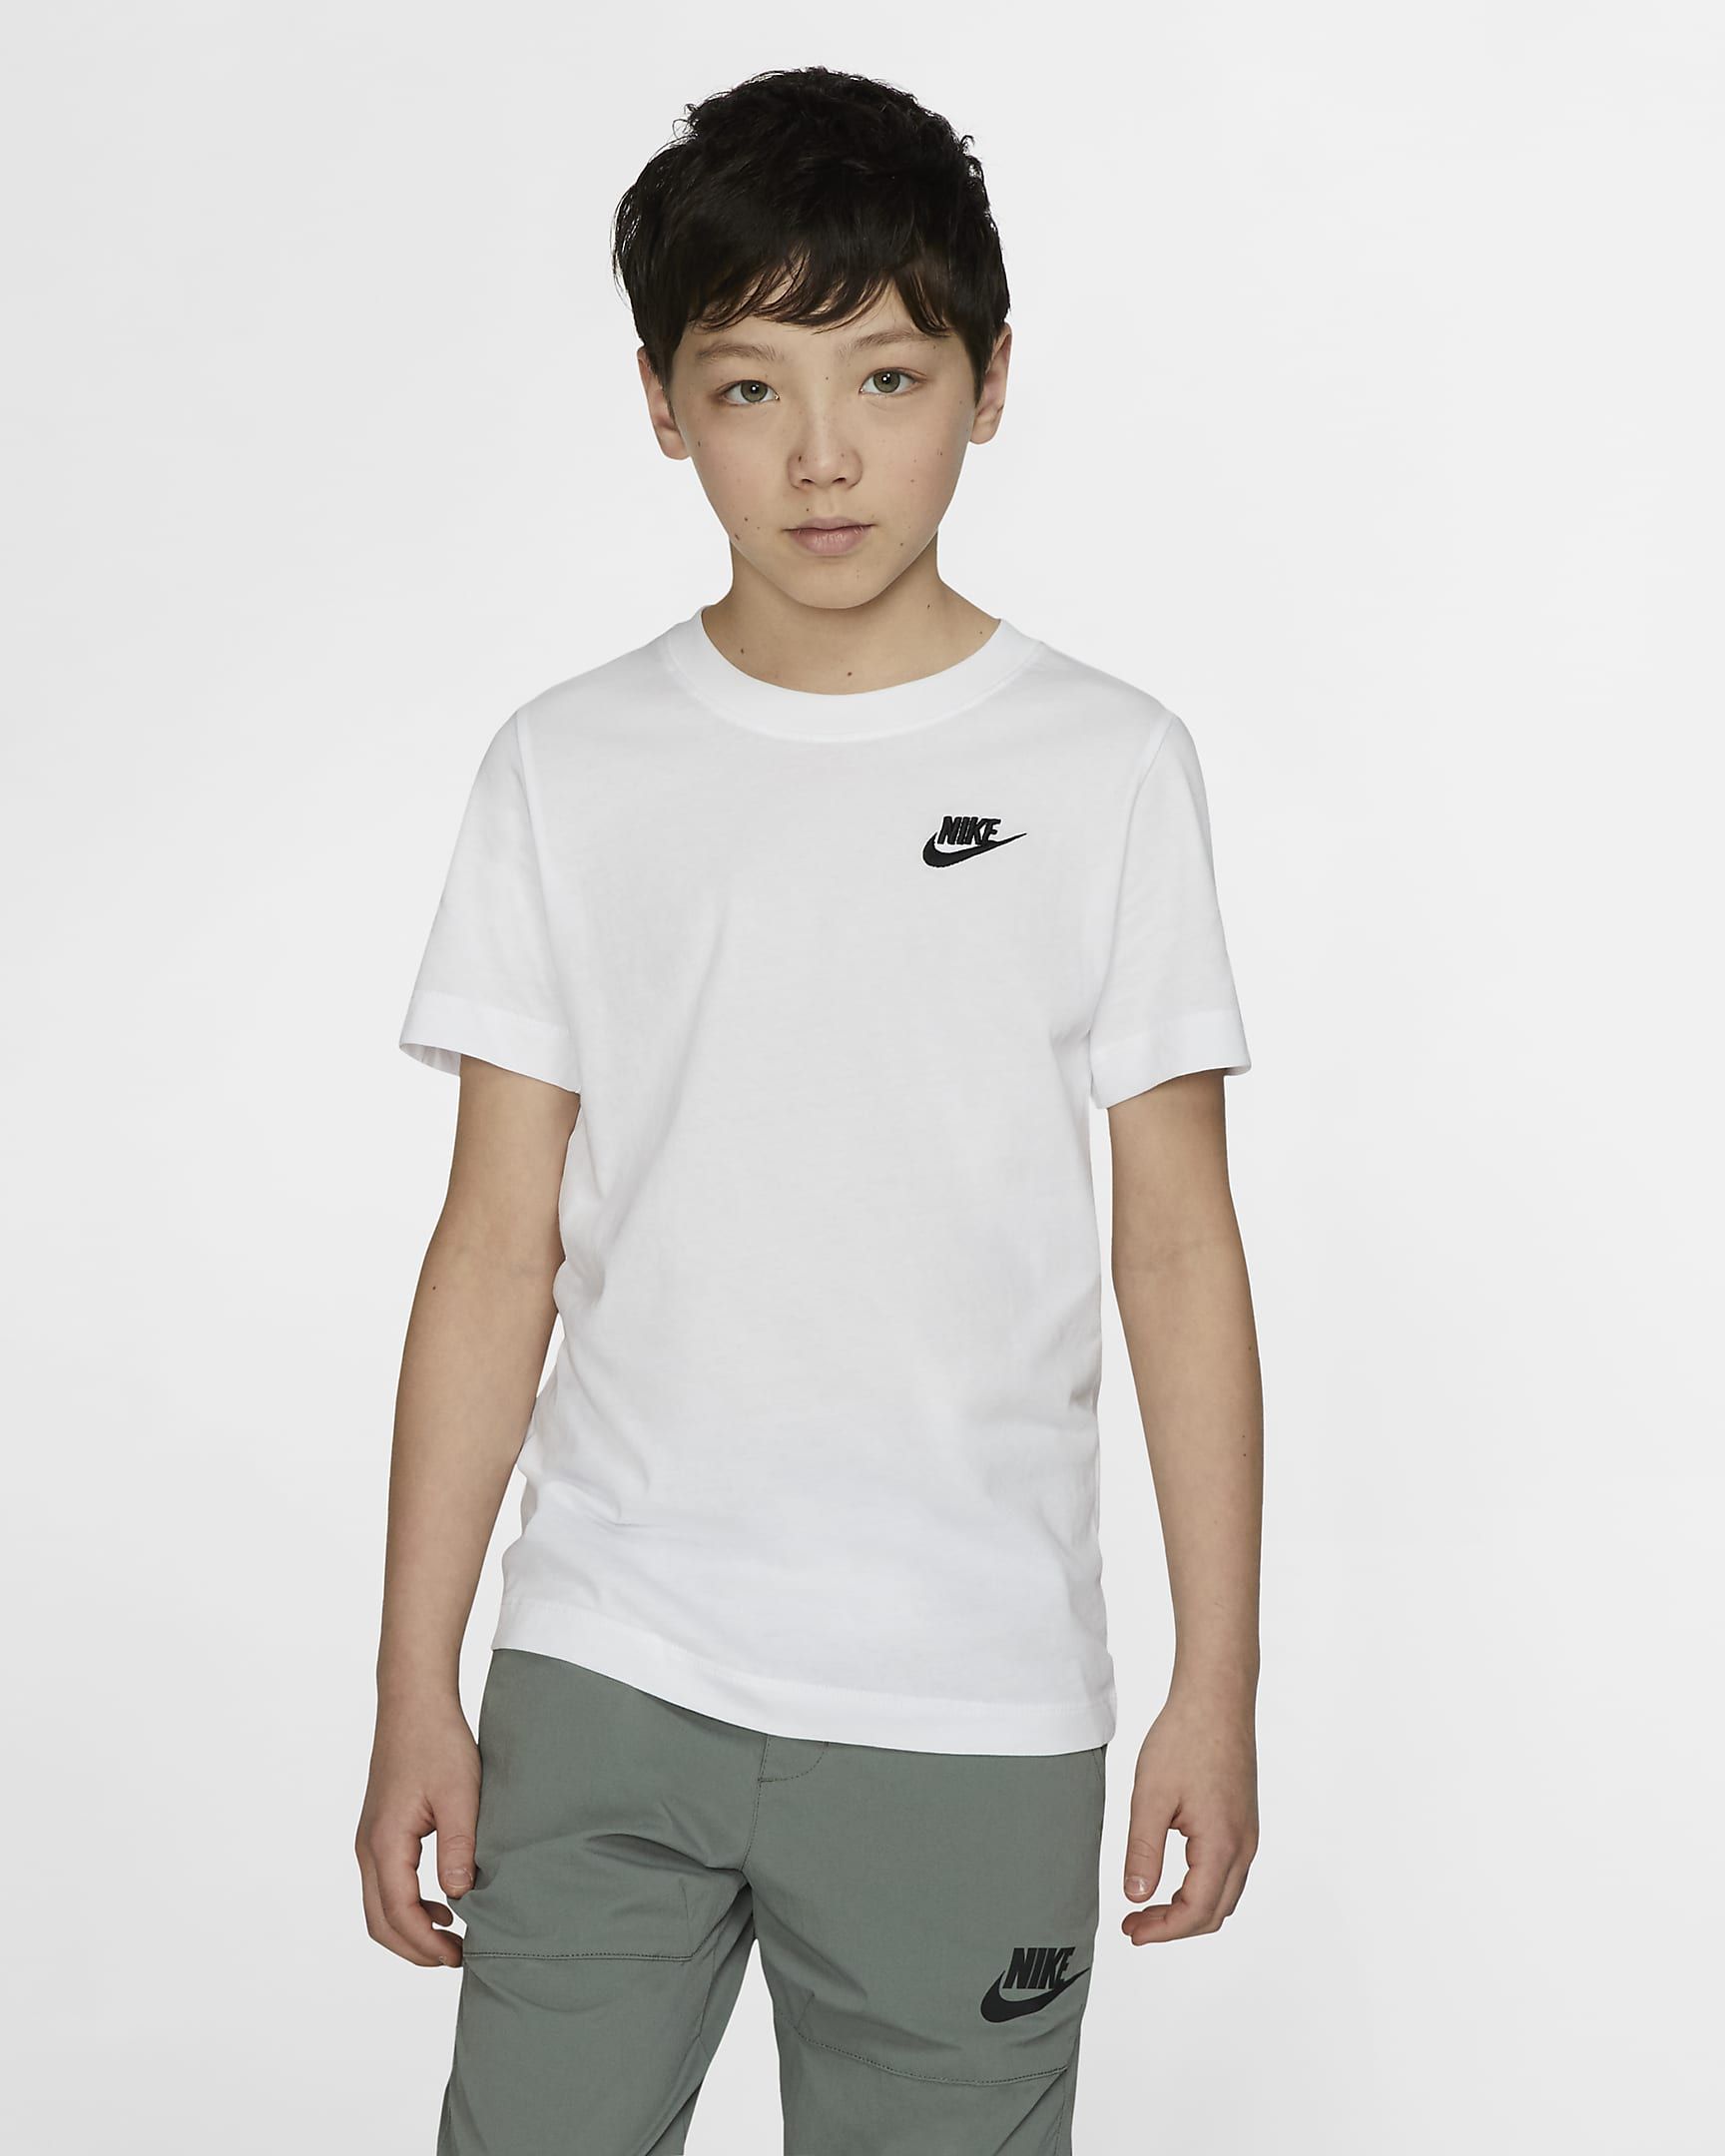 Nike Sportswear Big Kids' T-Shirt. Nike.com | Nike (US)